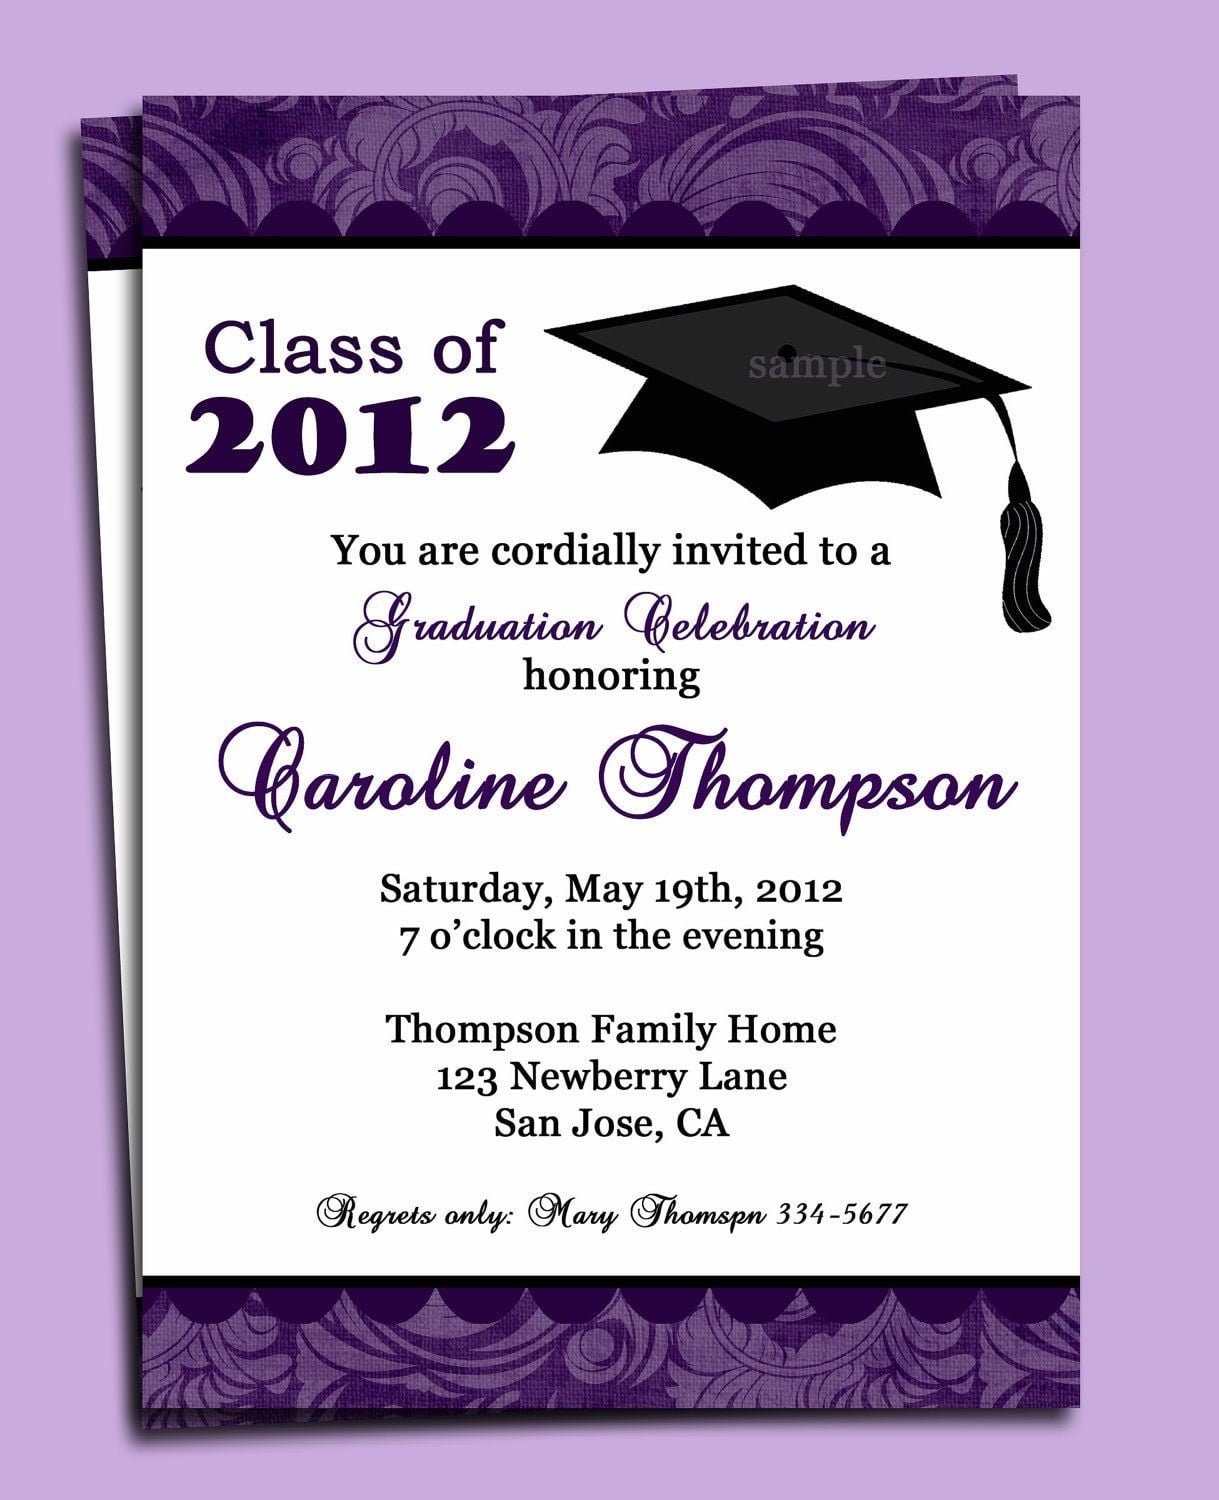 samples-of-graduation-invitations